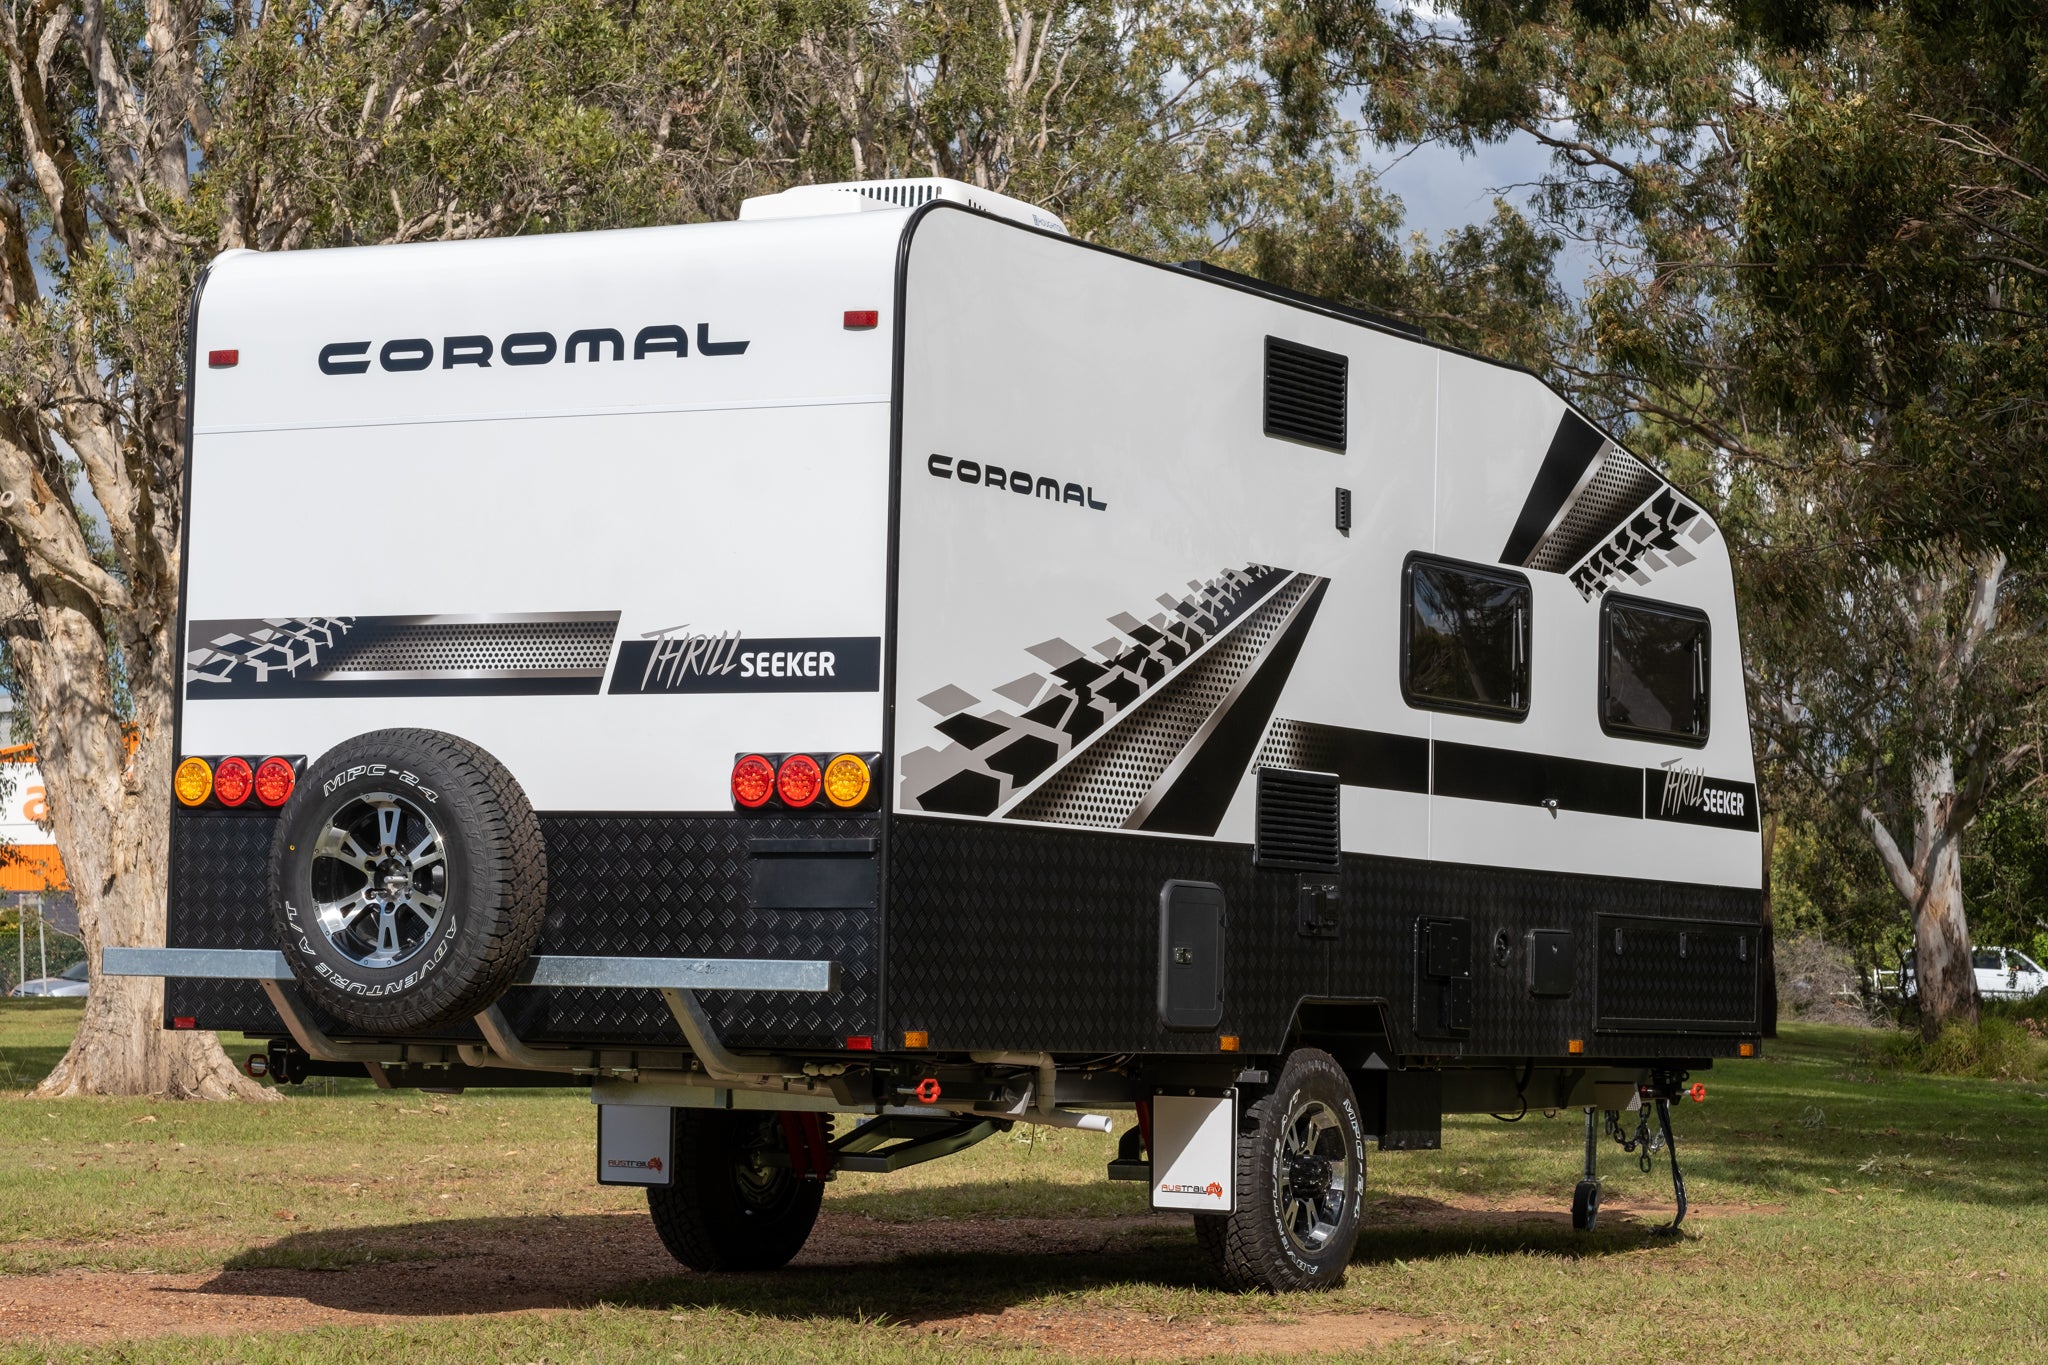 Coromal Thrill Seeker 18'6 Family caravan rear view